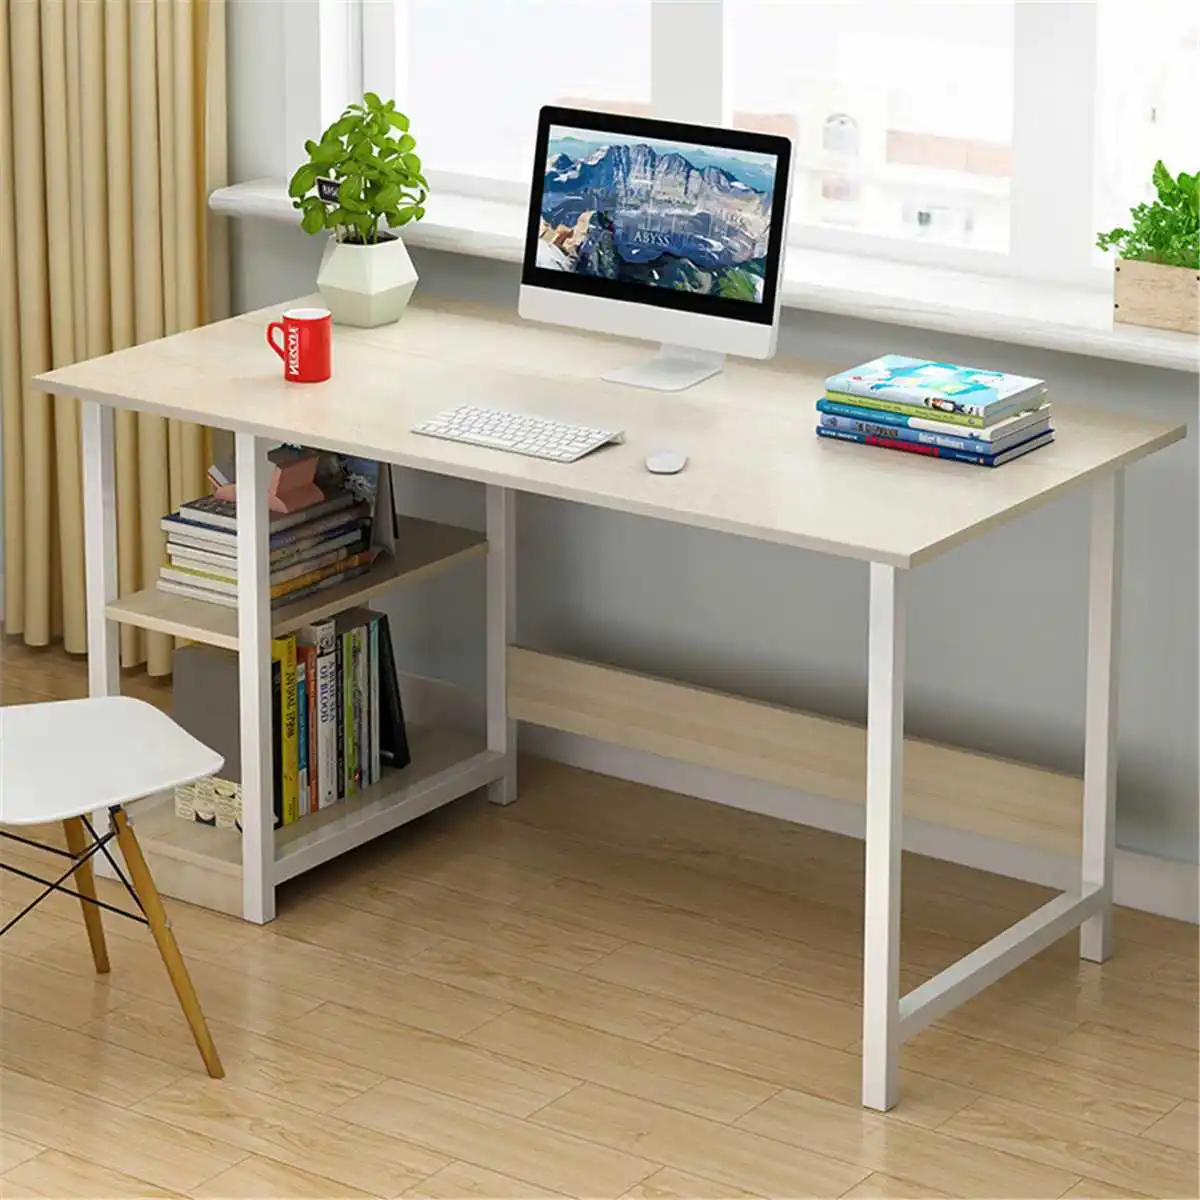 47"/39" Desktop Computer Desk PC Laptop Table with 2-Tier Storage Shelves Writing Desk Workstation for Home/Office/Study Room